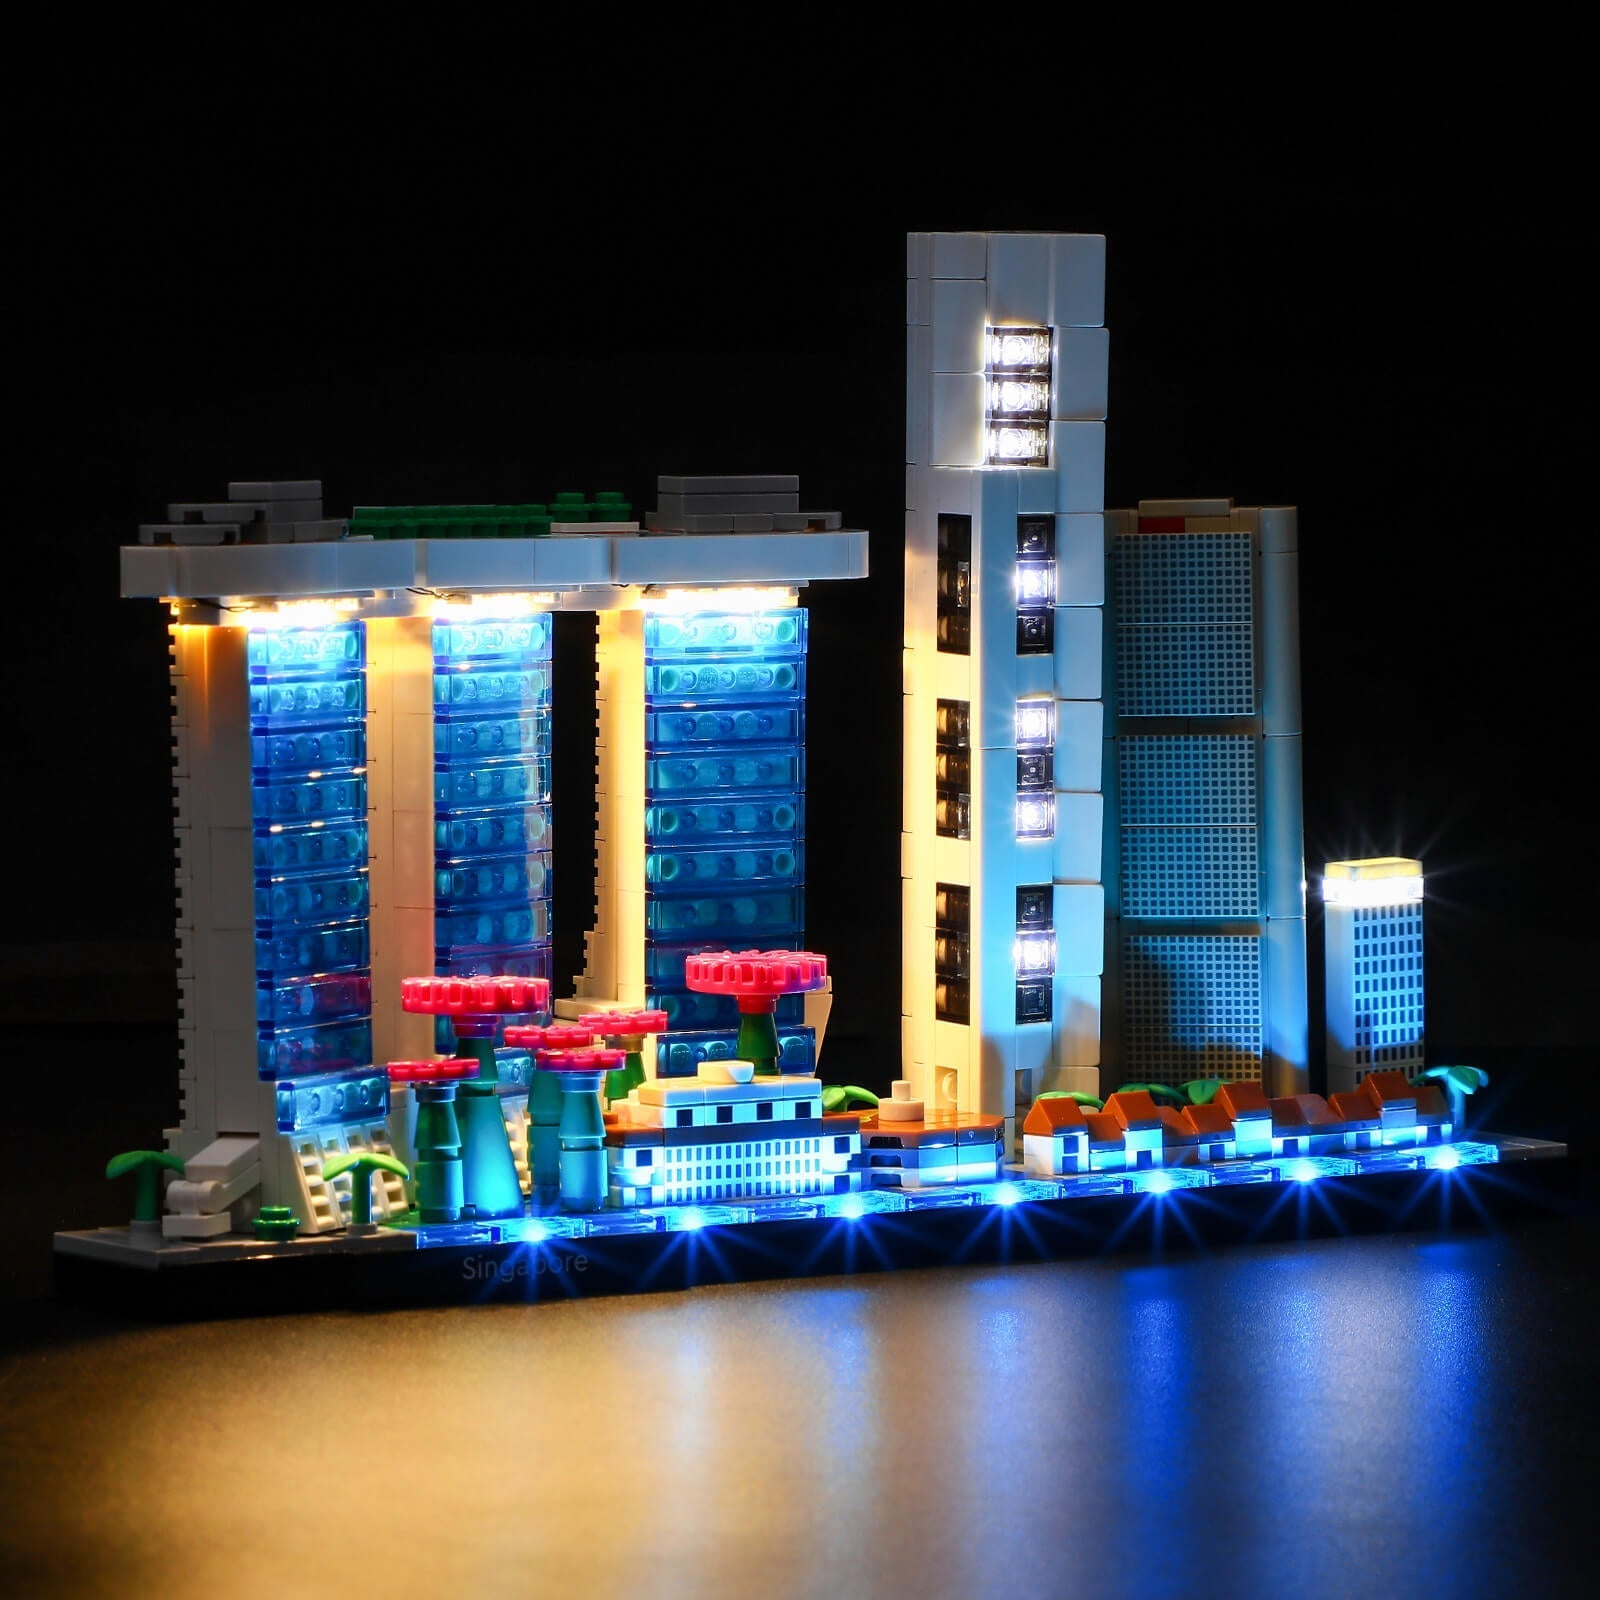  LEGO Architecture Singapore 21057 Building Set